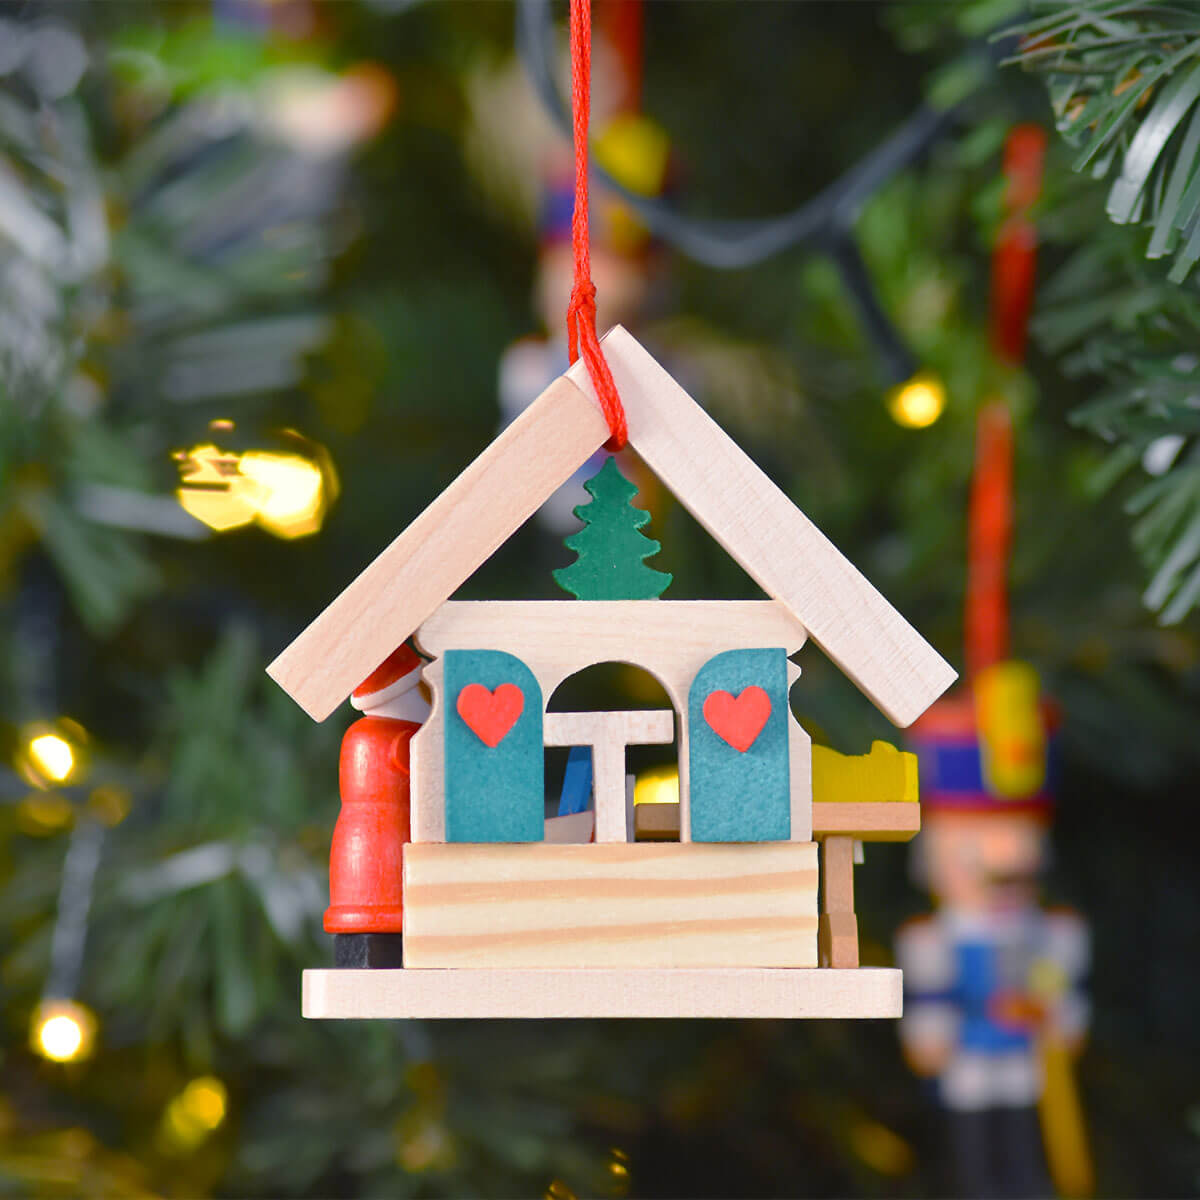 House 'Santa Claus' Ornament with bird feeder